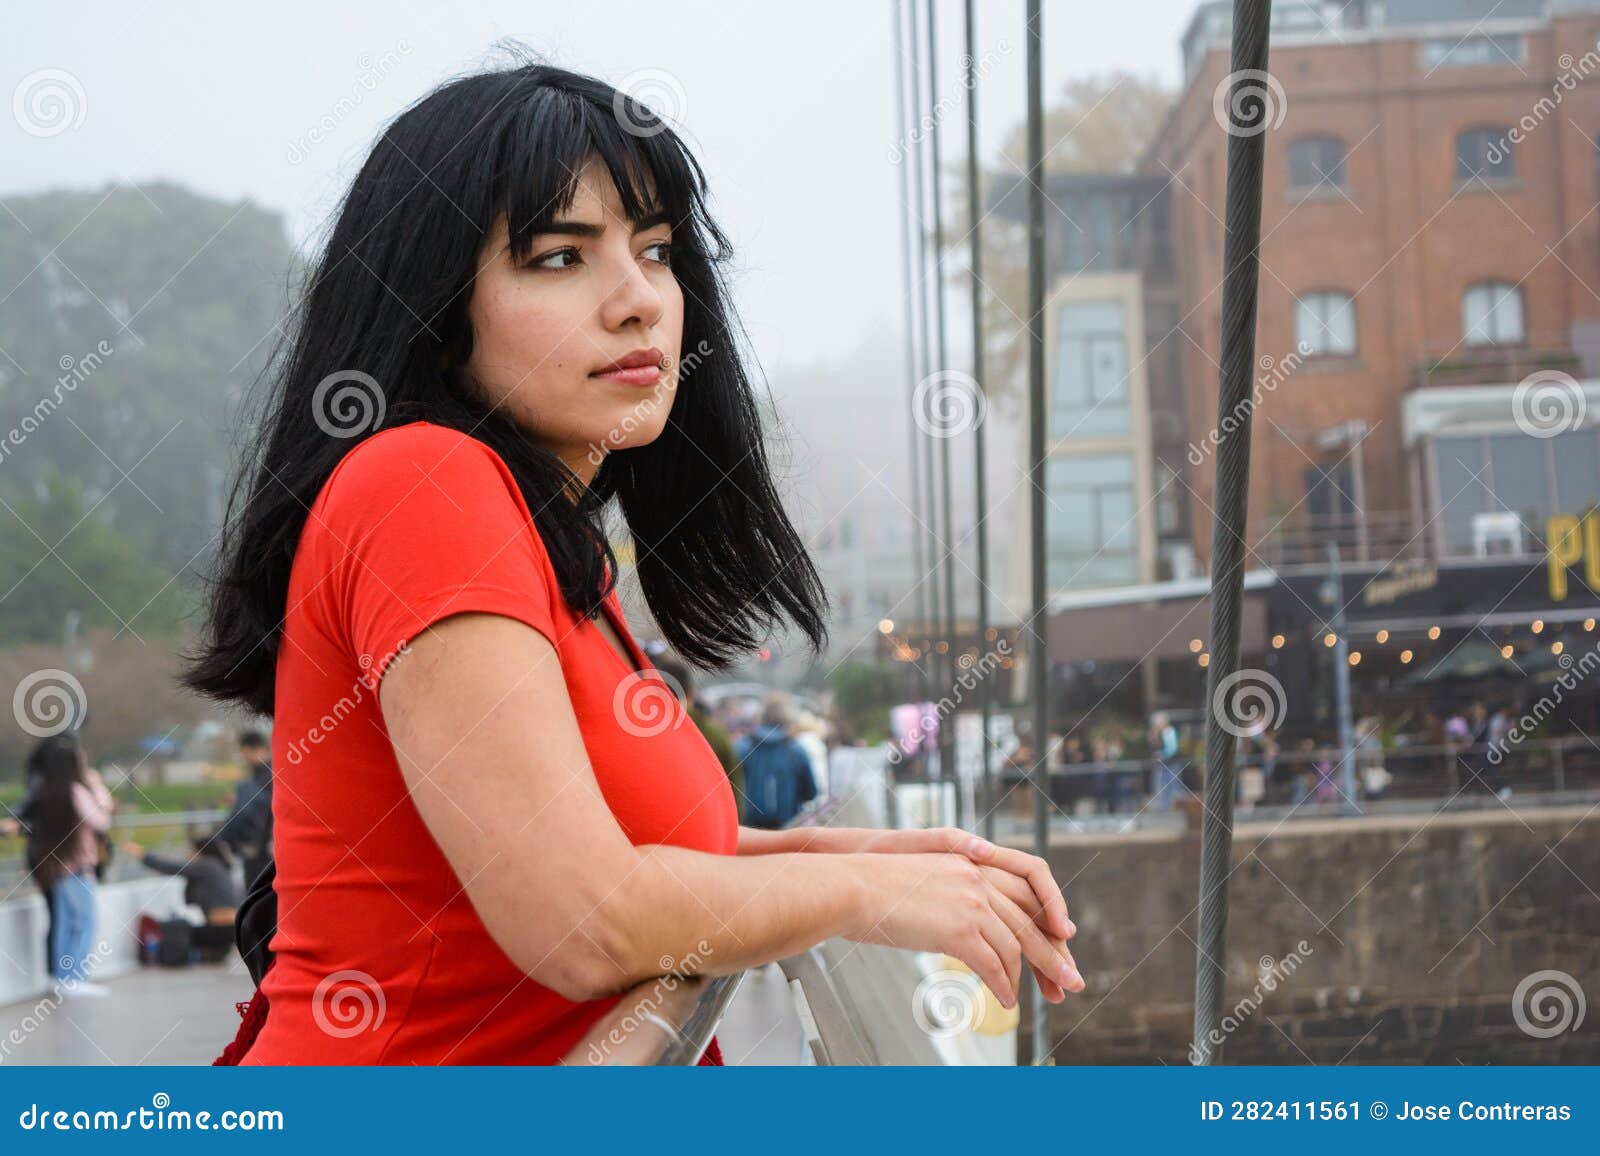 young venezuelan tourist in puerto madero stop at el puente de la mujer watching and thinking